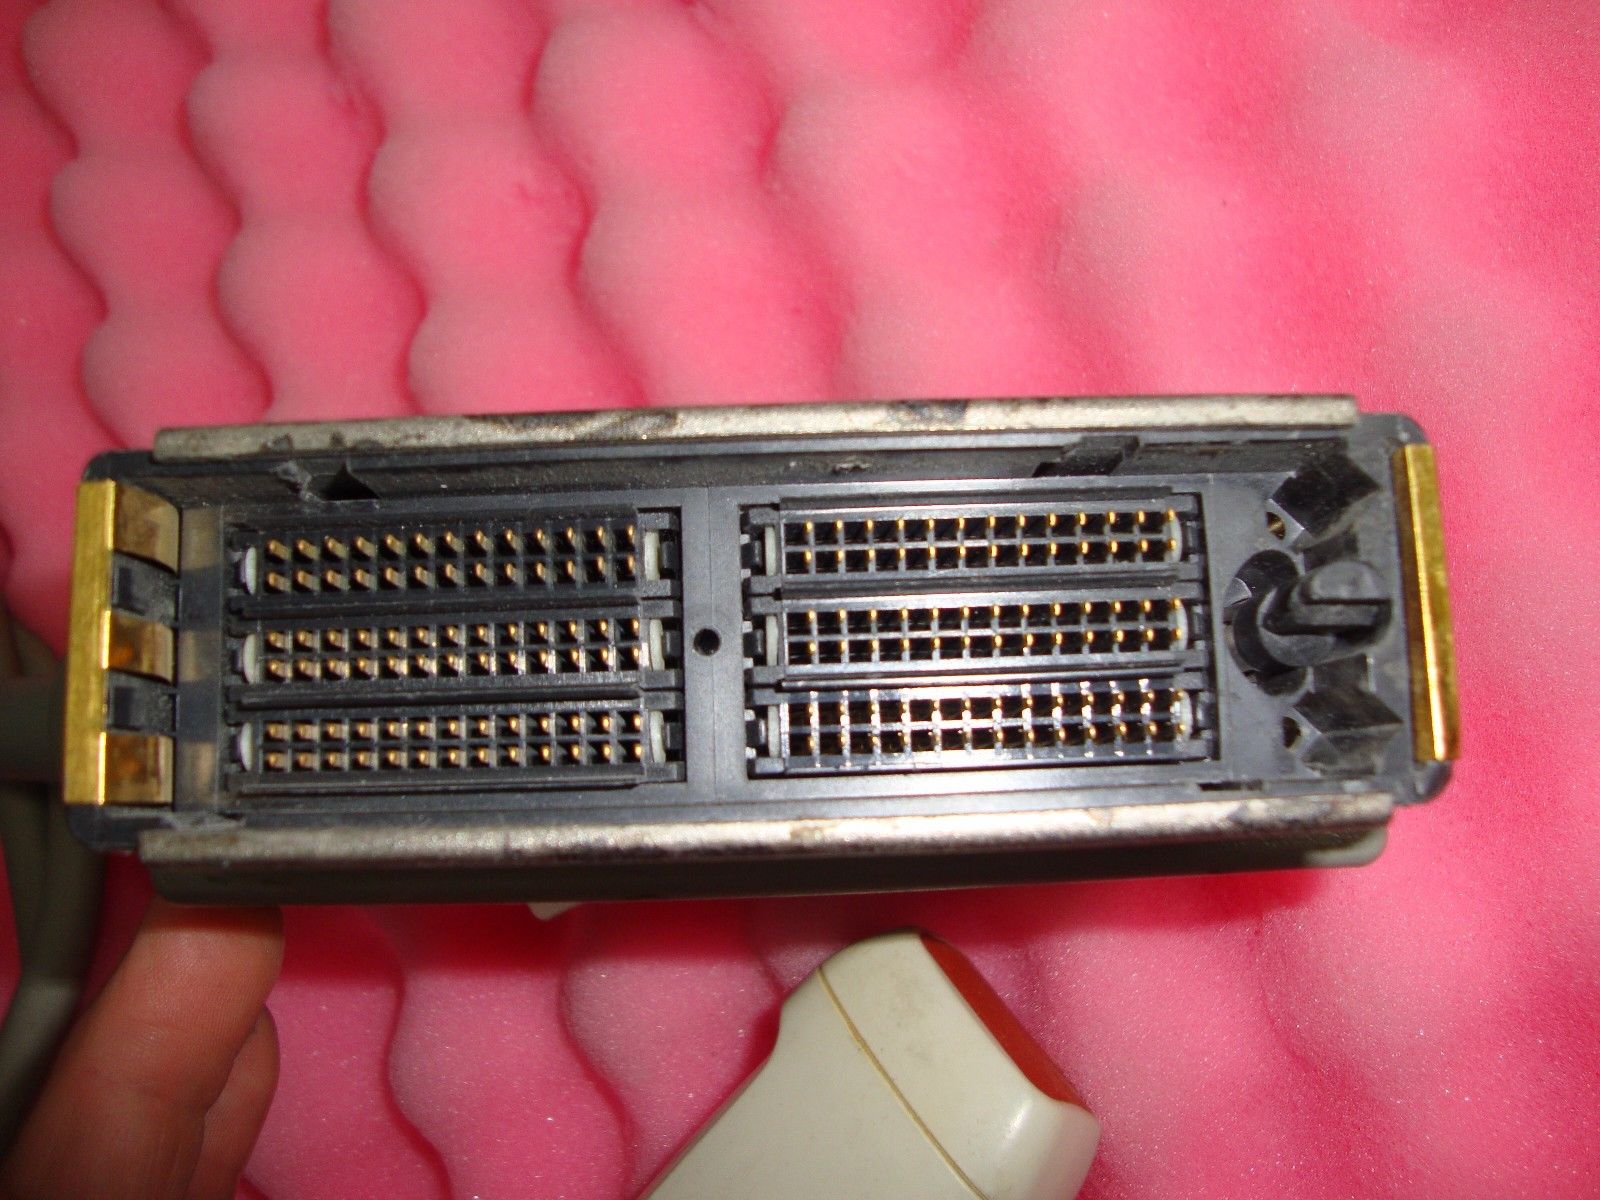 closeup of probe connector